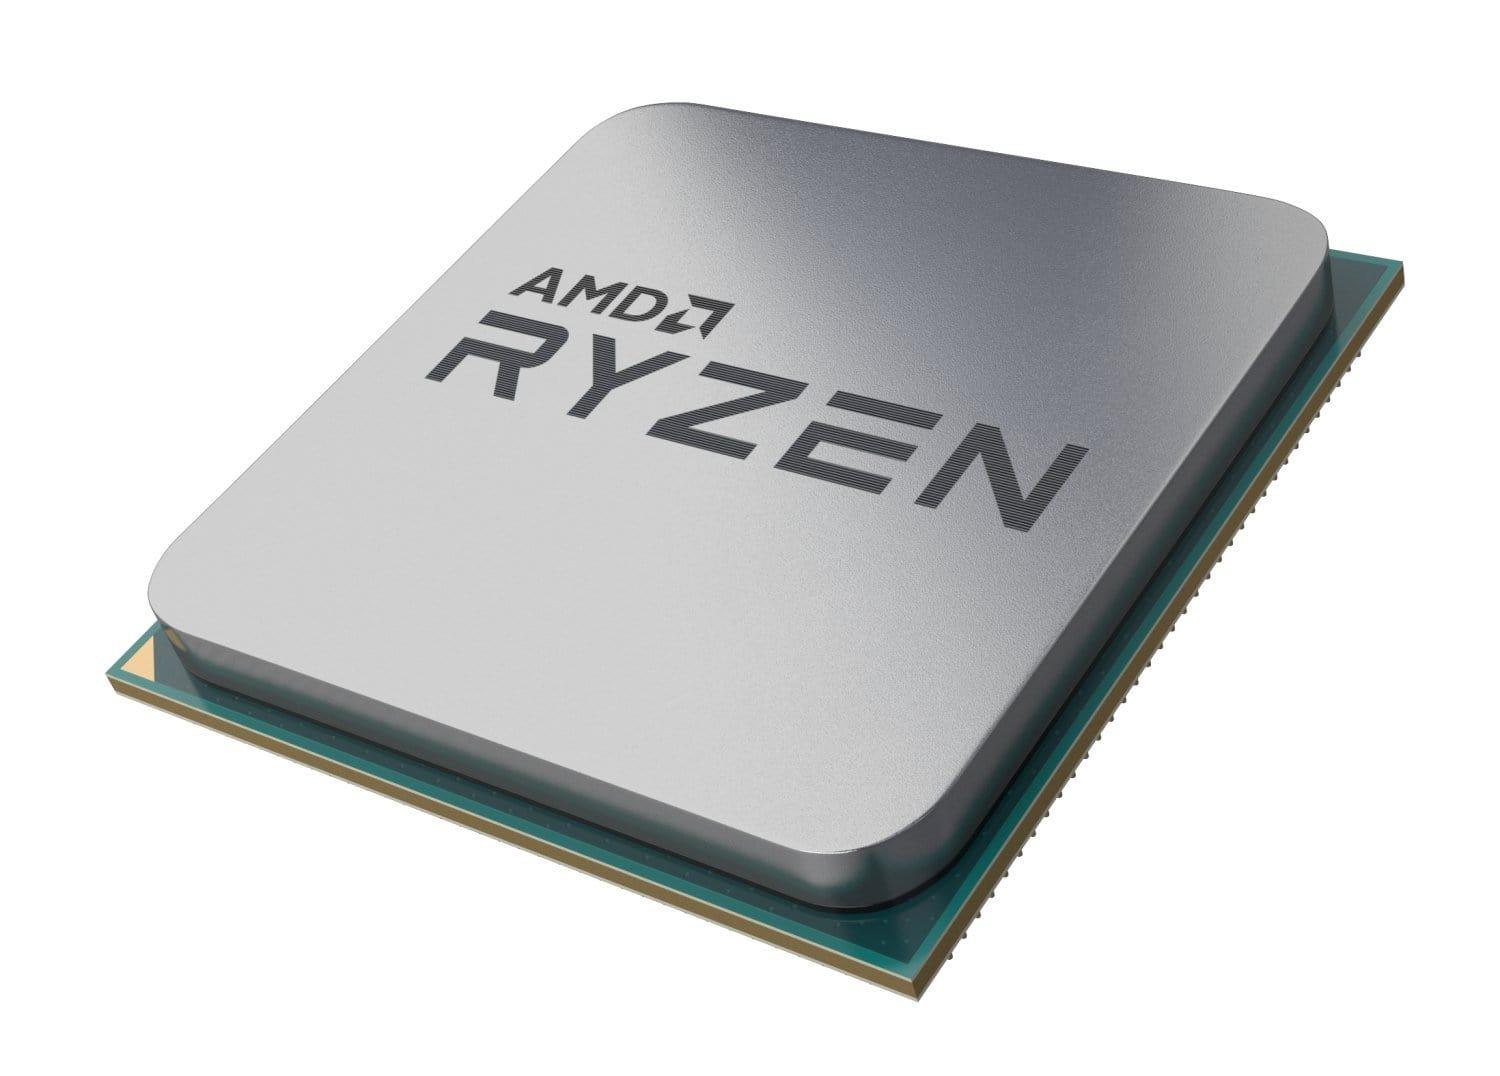 AMD Ryzen 7 2700X Desktop Processor 8 Cores up to 4.3GHz-Processor-dealsplant